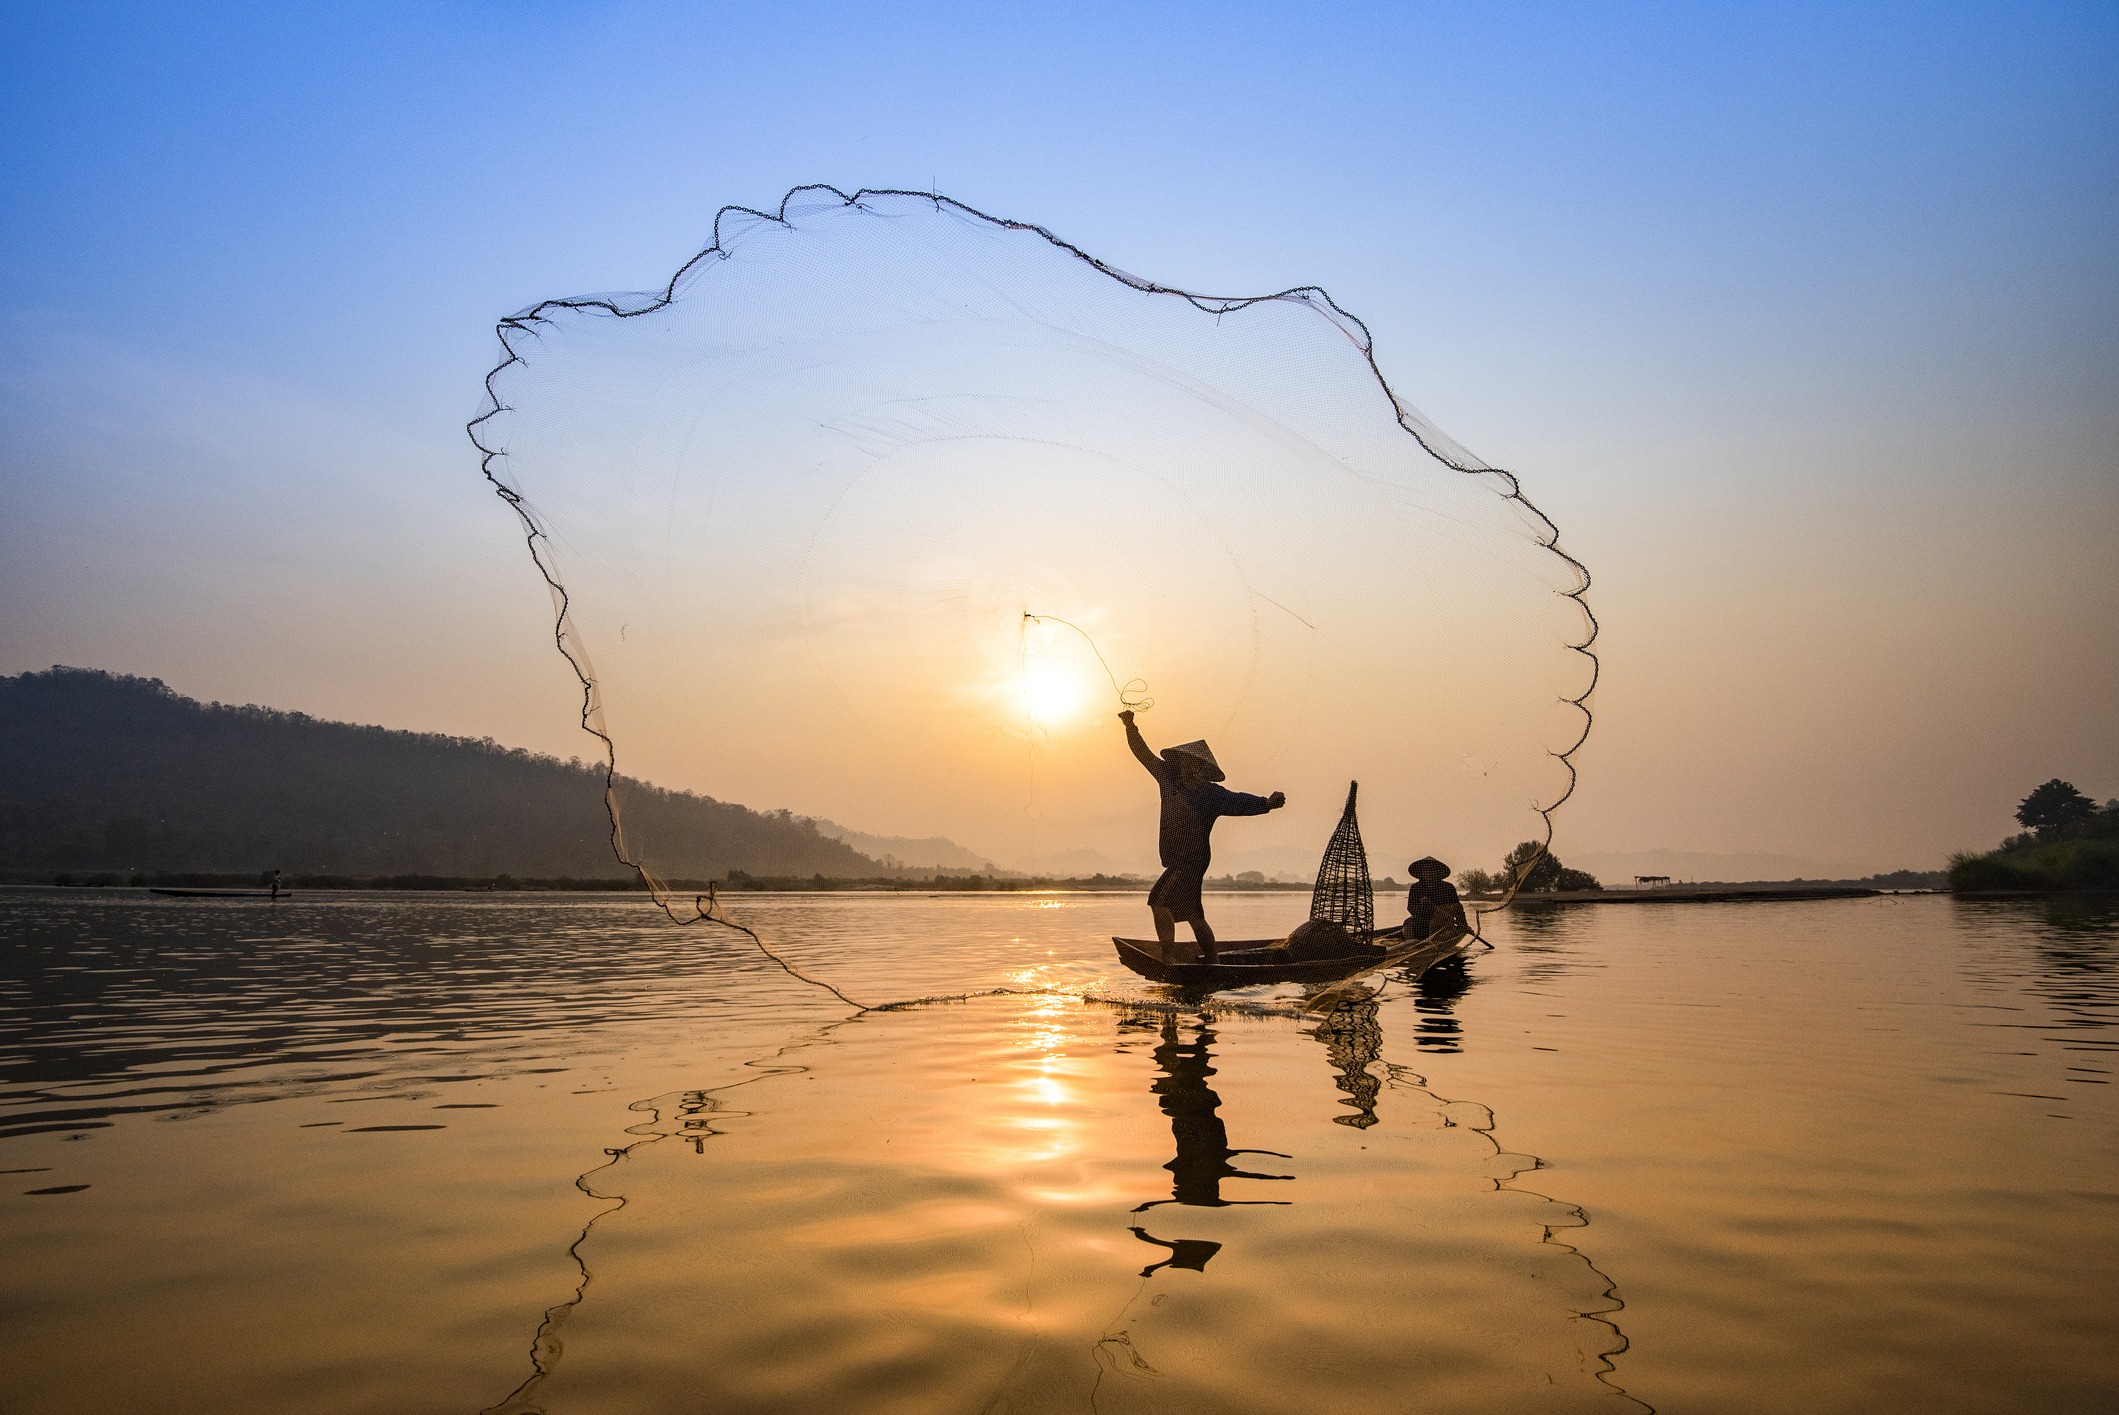 Asia-fisherman-net-using-on-wooden-boat-casting-net-sunset